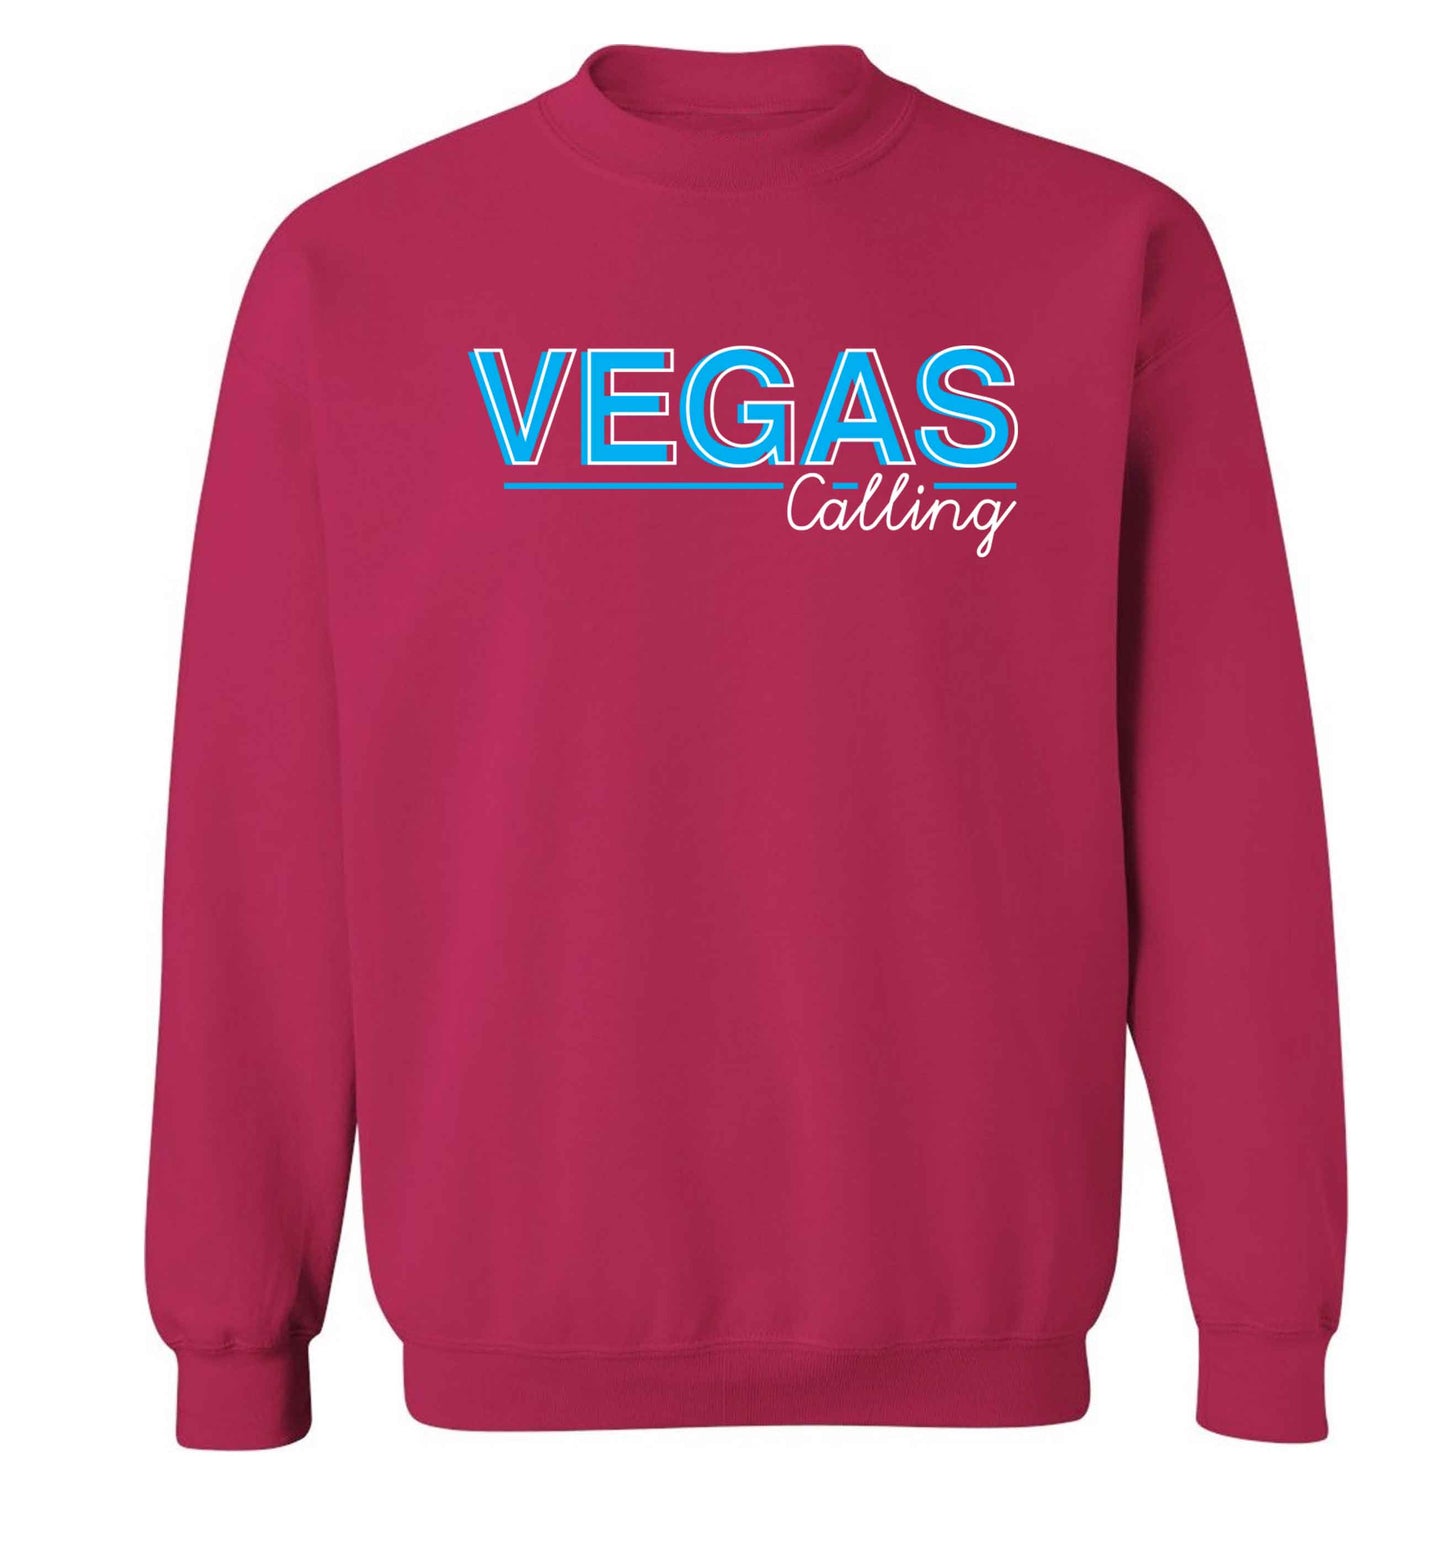 Vegas calling Adult's unisex pink Sweater 2XL